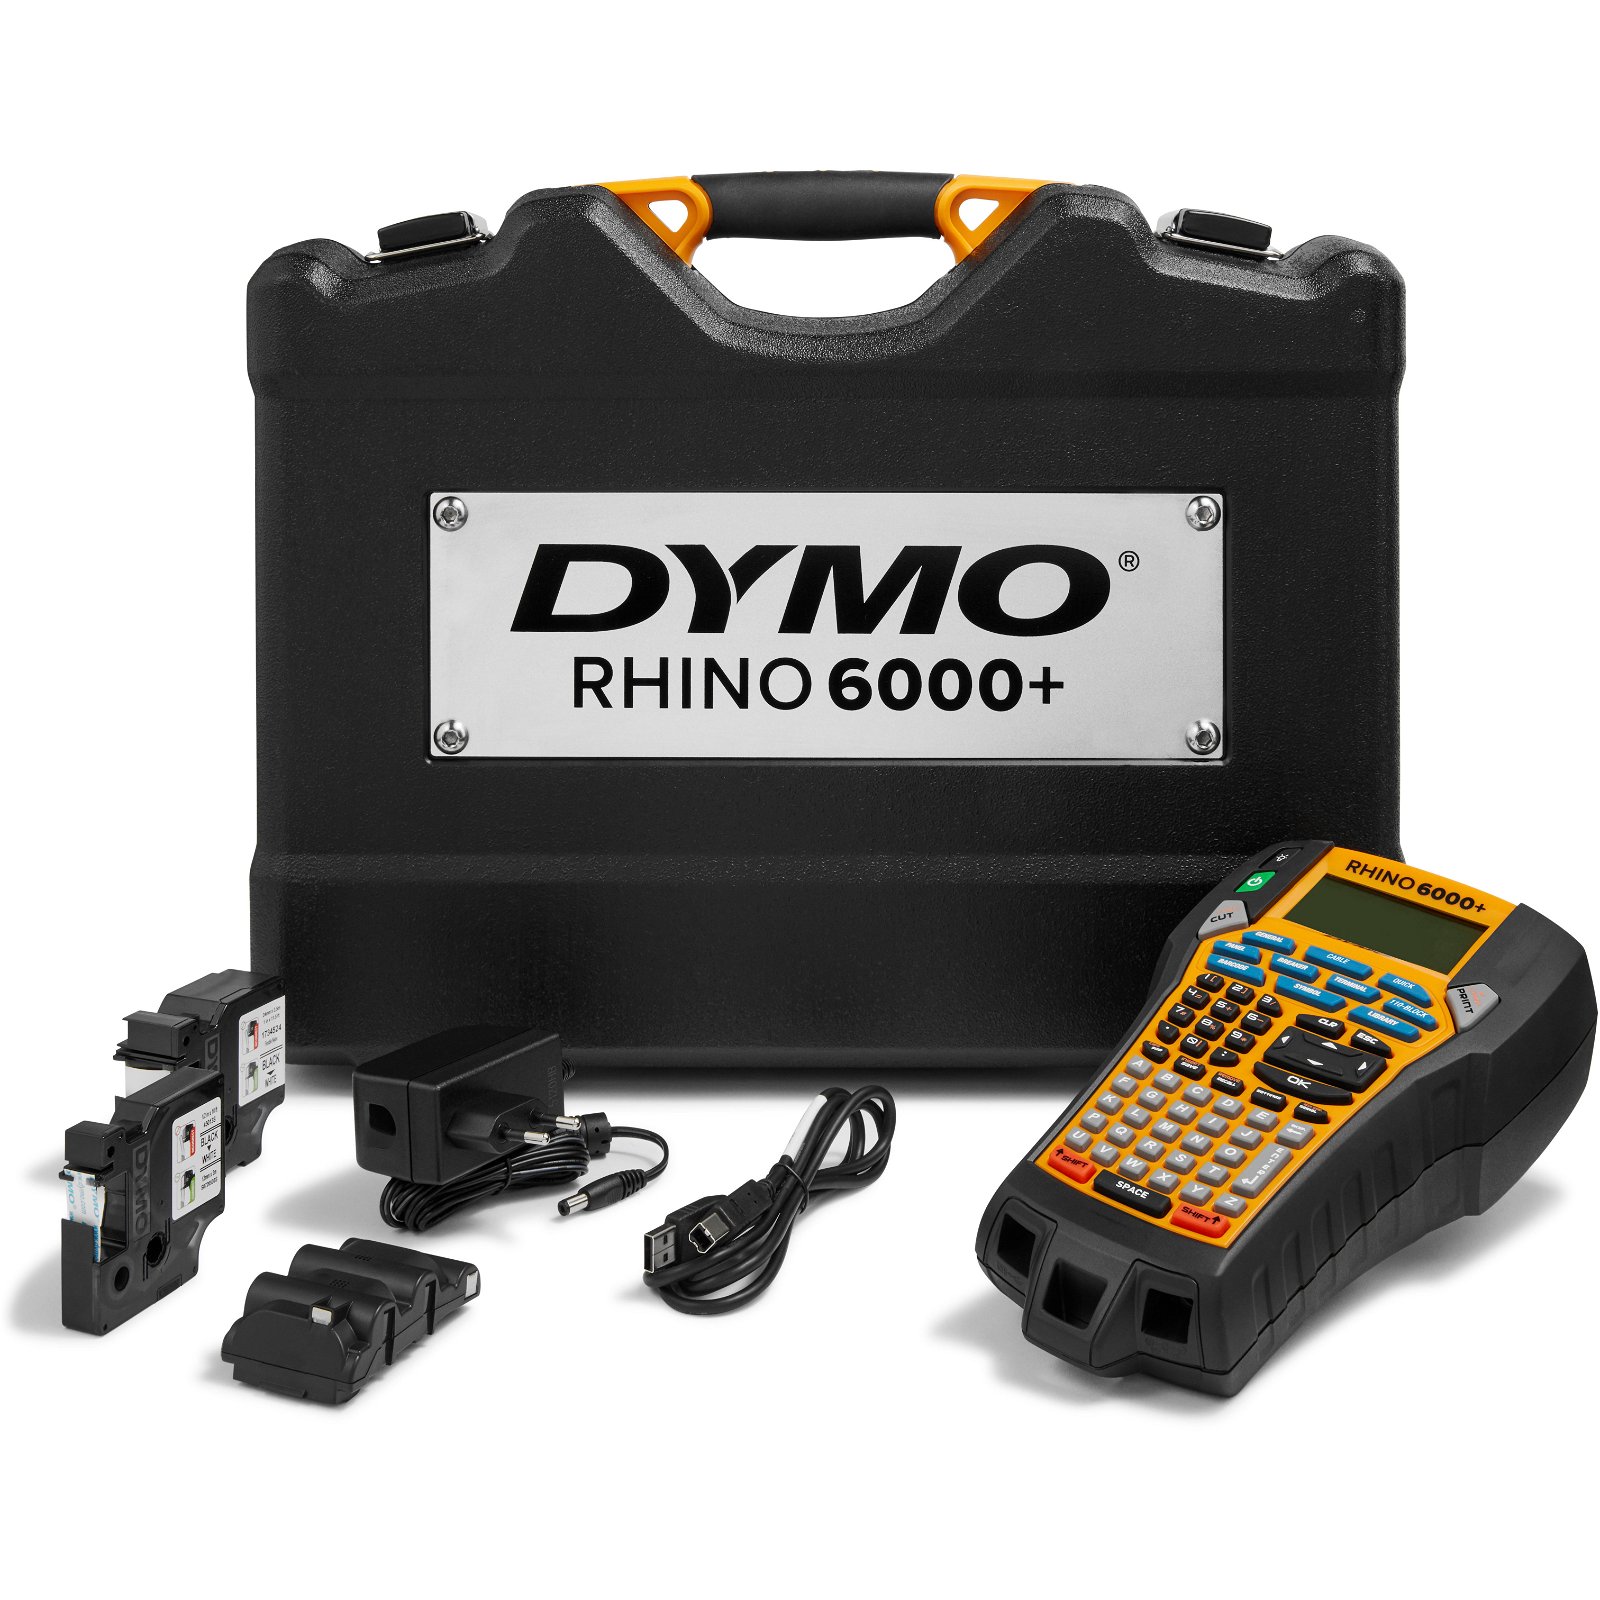 Dymo Rhino 6000+ labelprinter valuepack